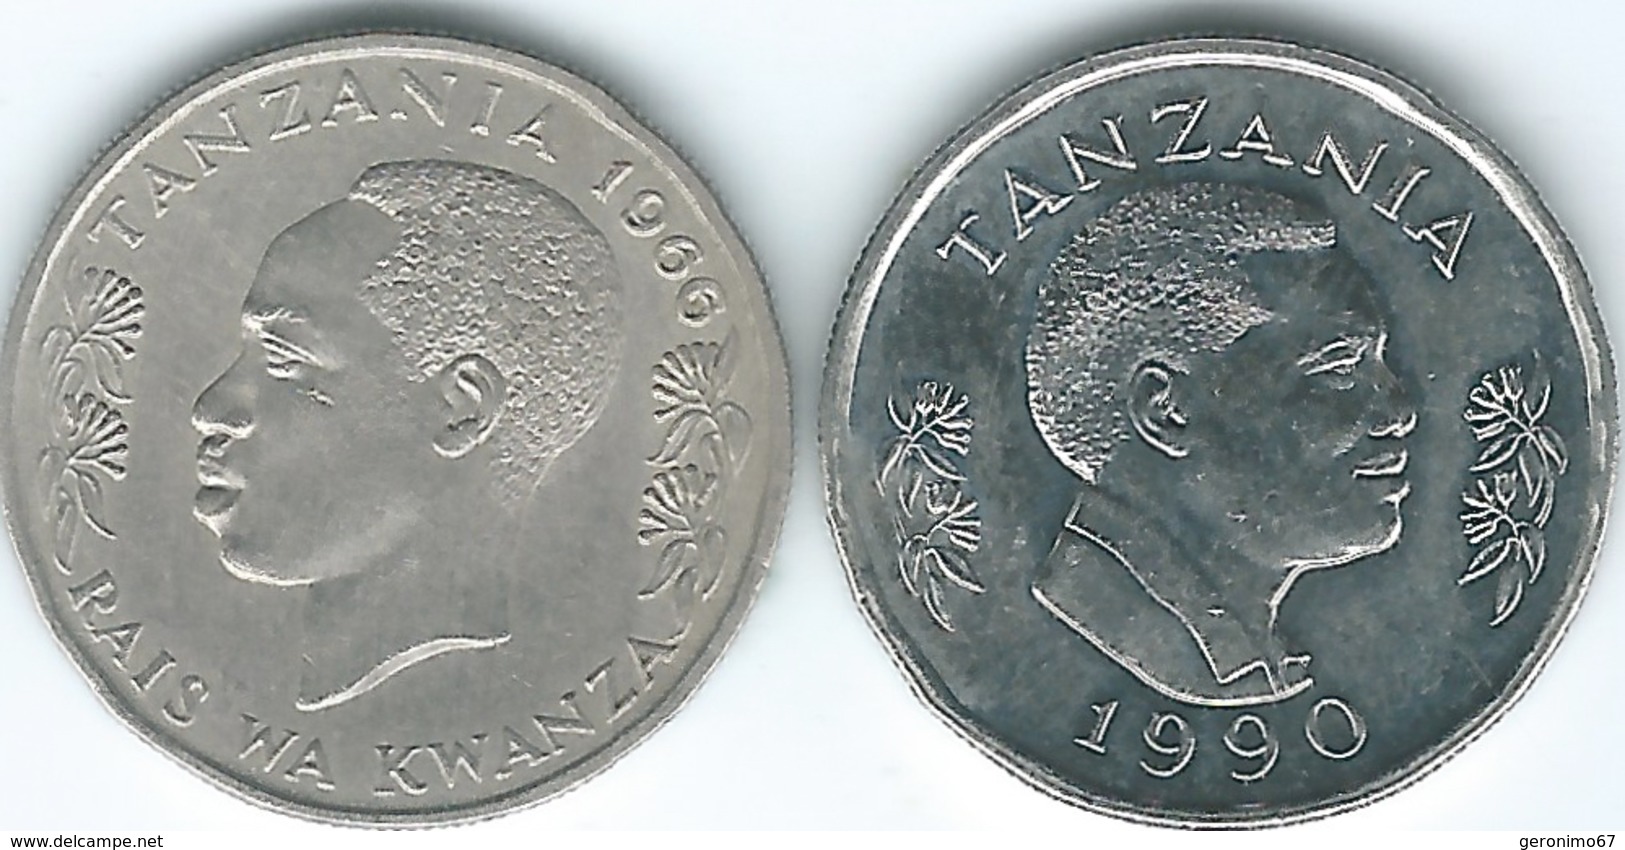 Tanzania - 50 Senti - 1966 - KM3 & 1990 - KM26 - Tanzania